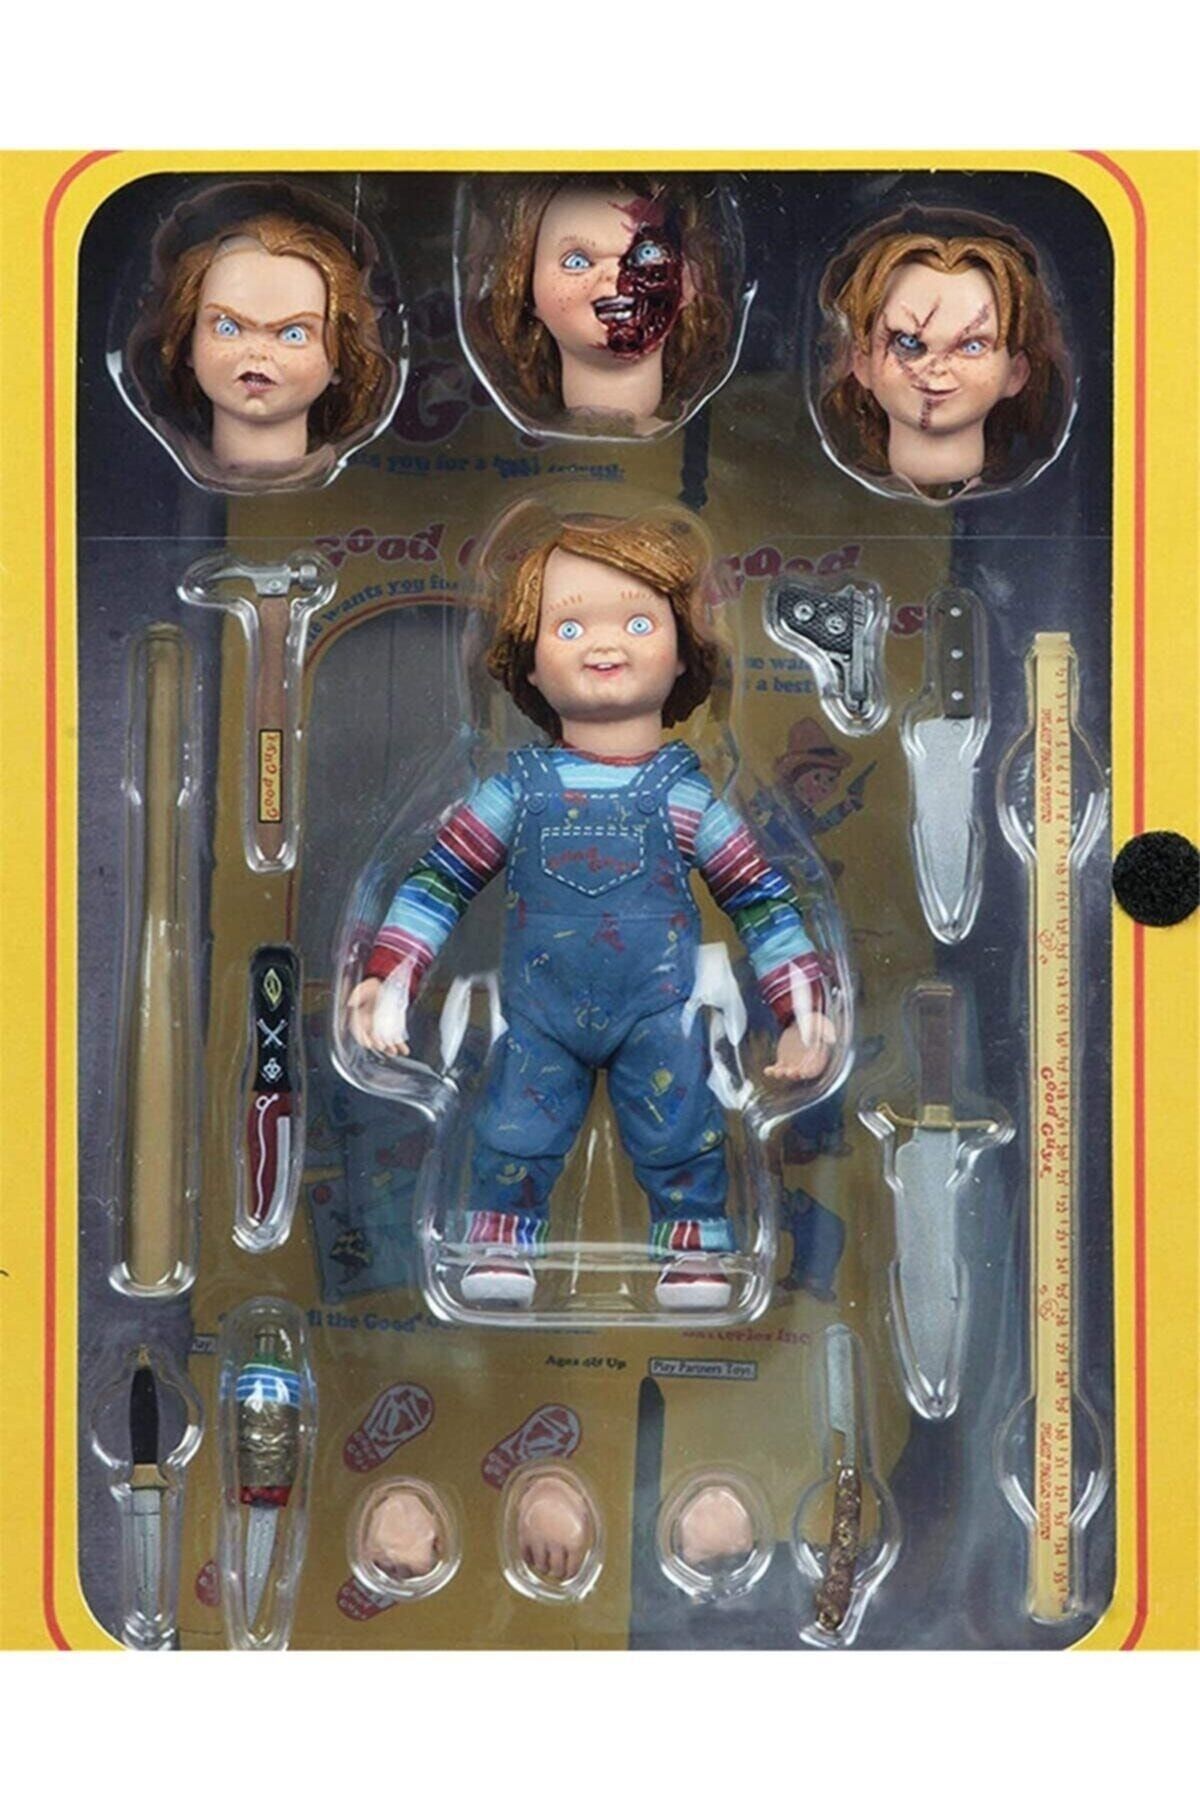 BENİMOLMALI Child's Play Bride Of Chucky, Chucky Çaki Oyuncak Bebek, Action Figure Chucky